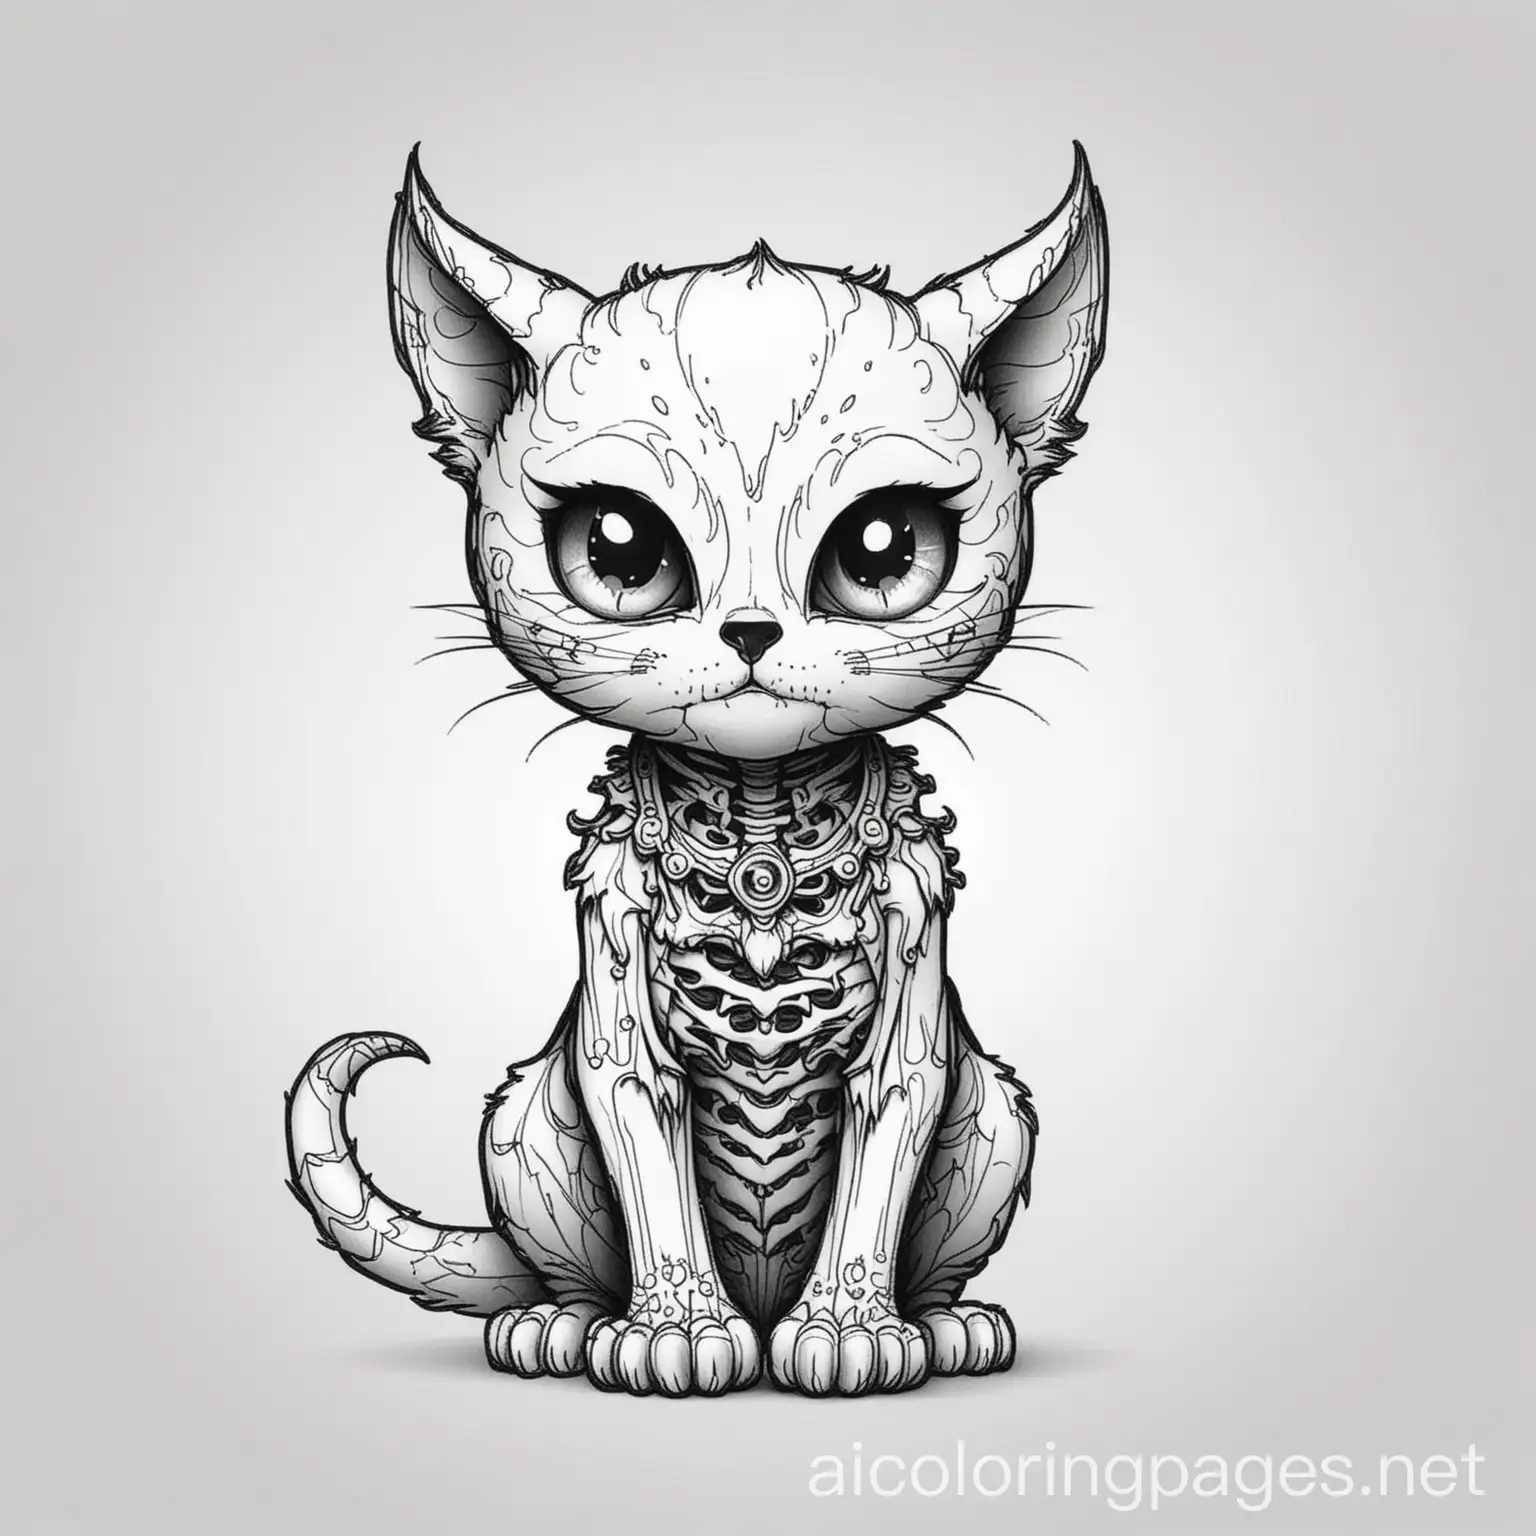 Cute-Devil-Skeleton-Cat-Coloring-Page